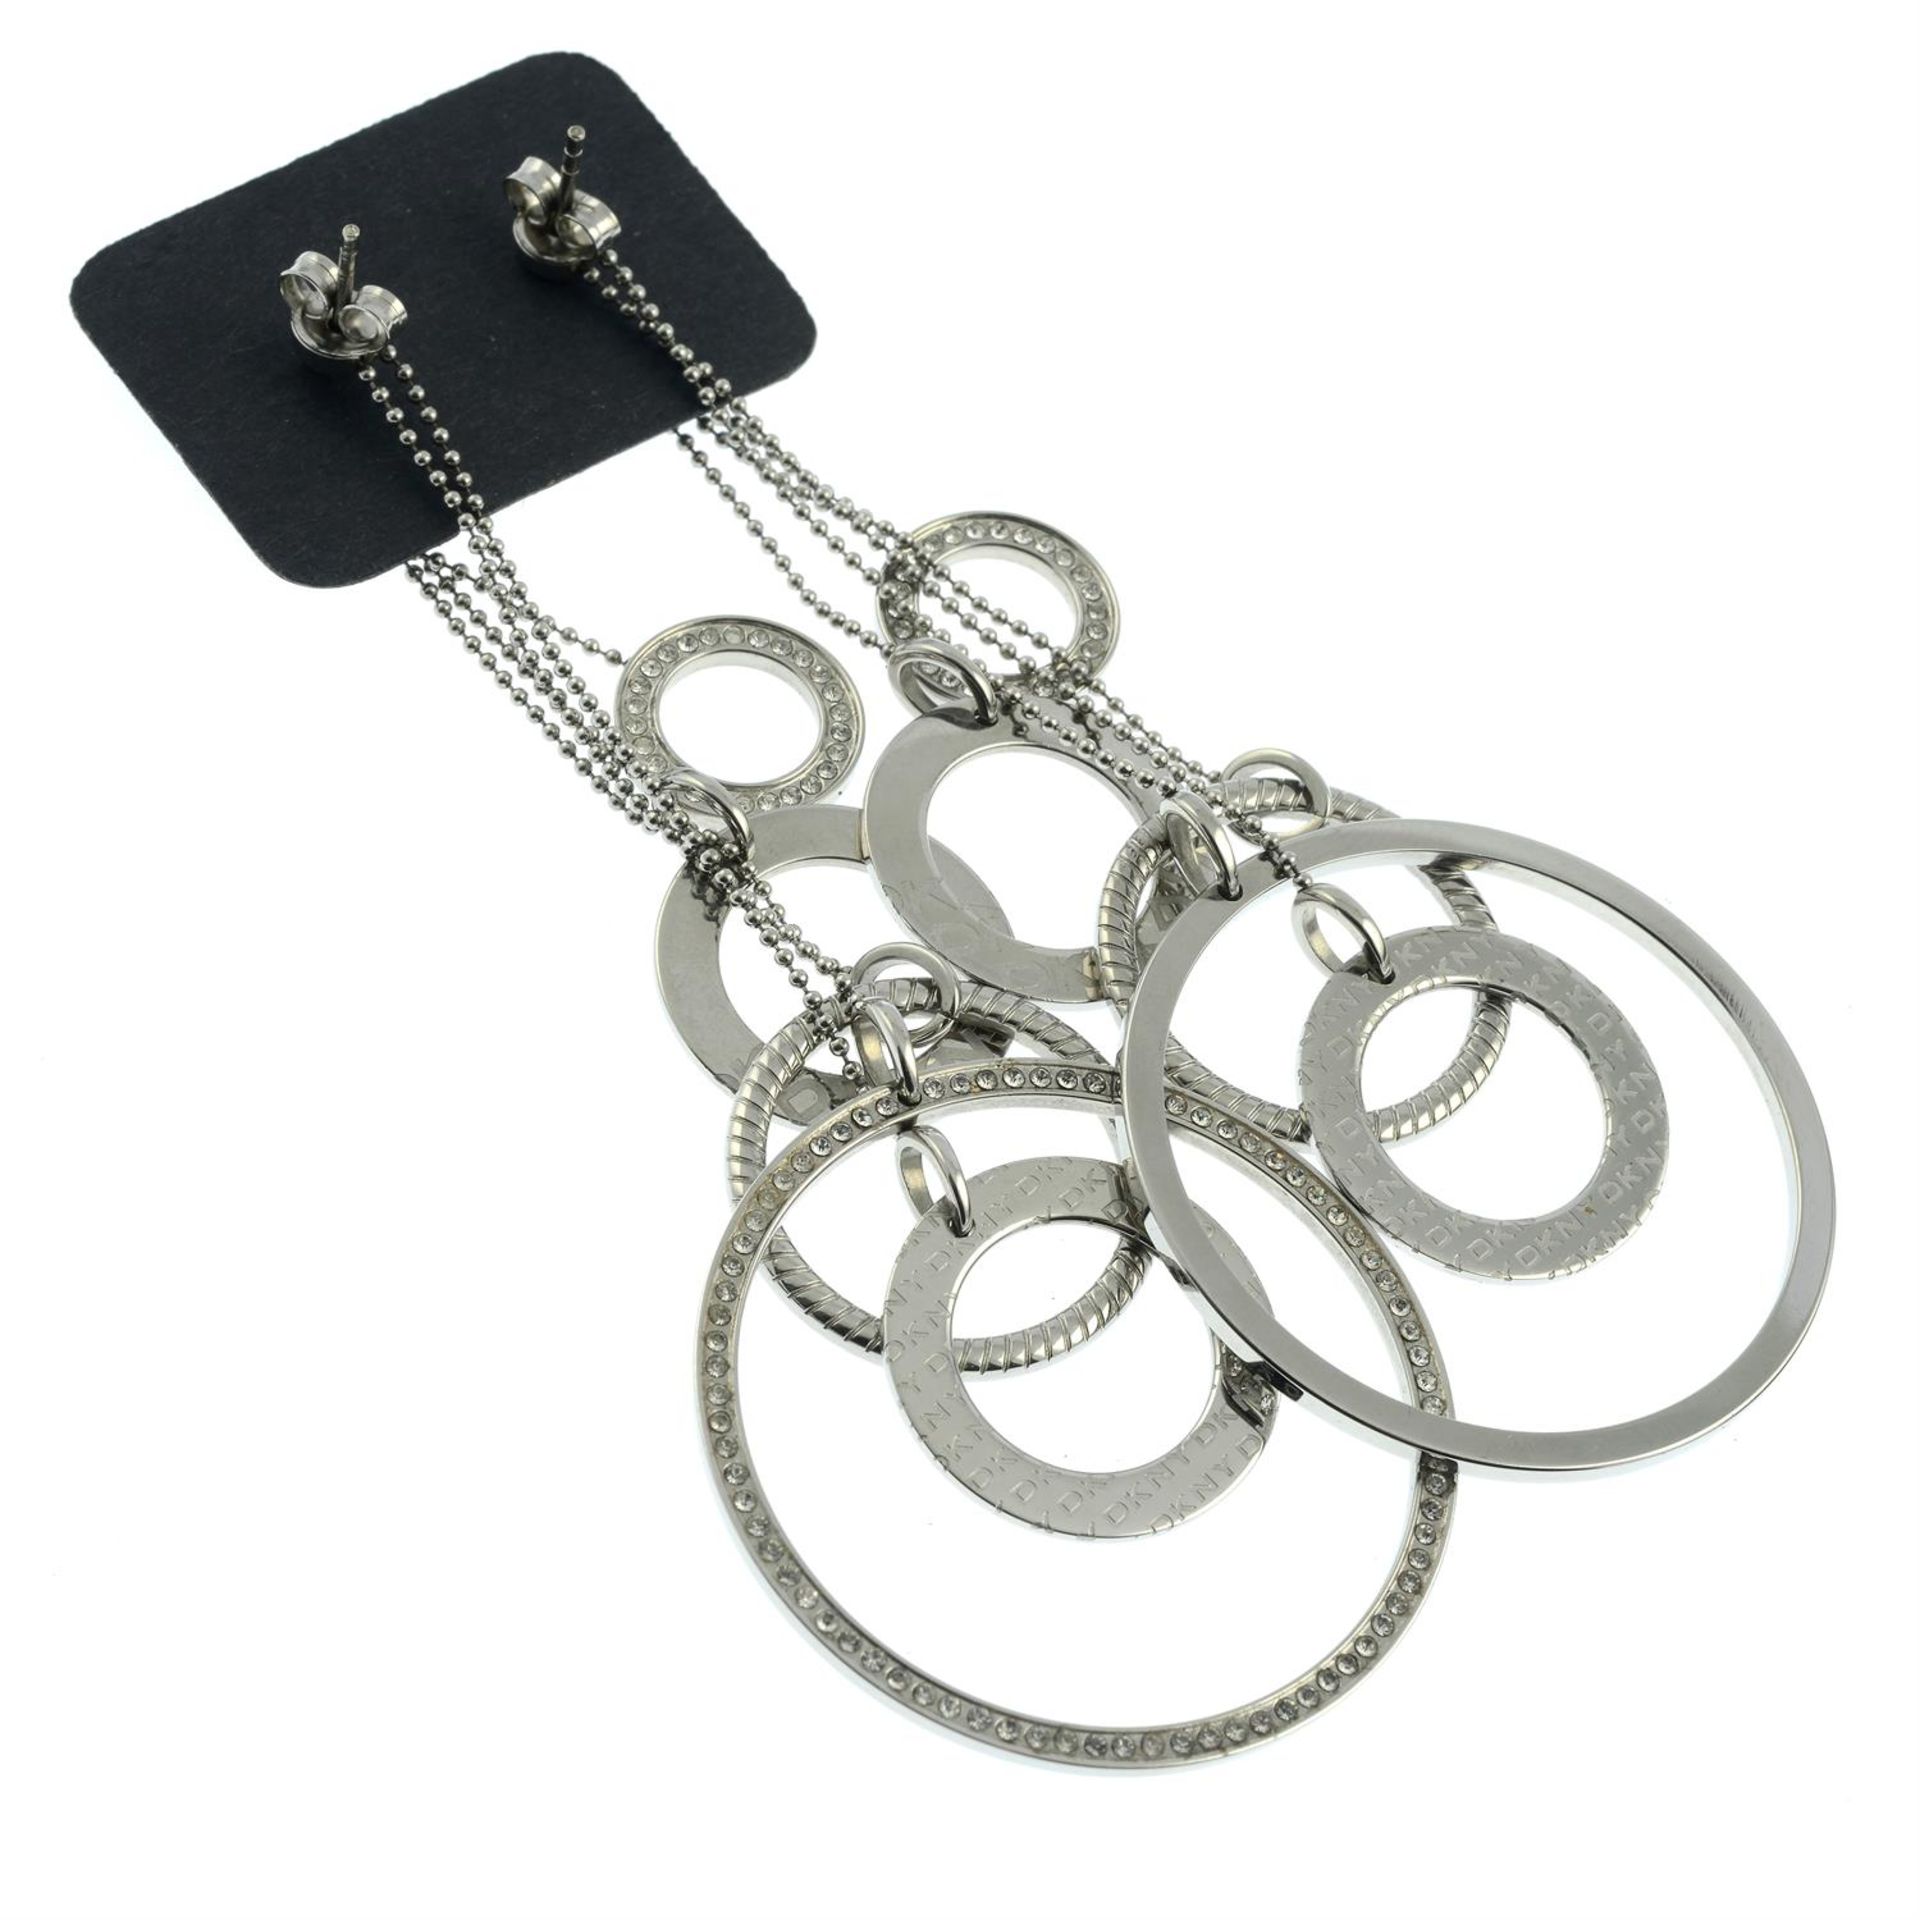 DKNY - a pair of drop earrings, bracelet and earring set. - Image 2 of 3